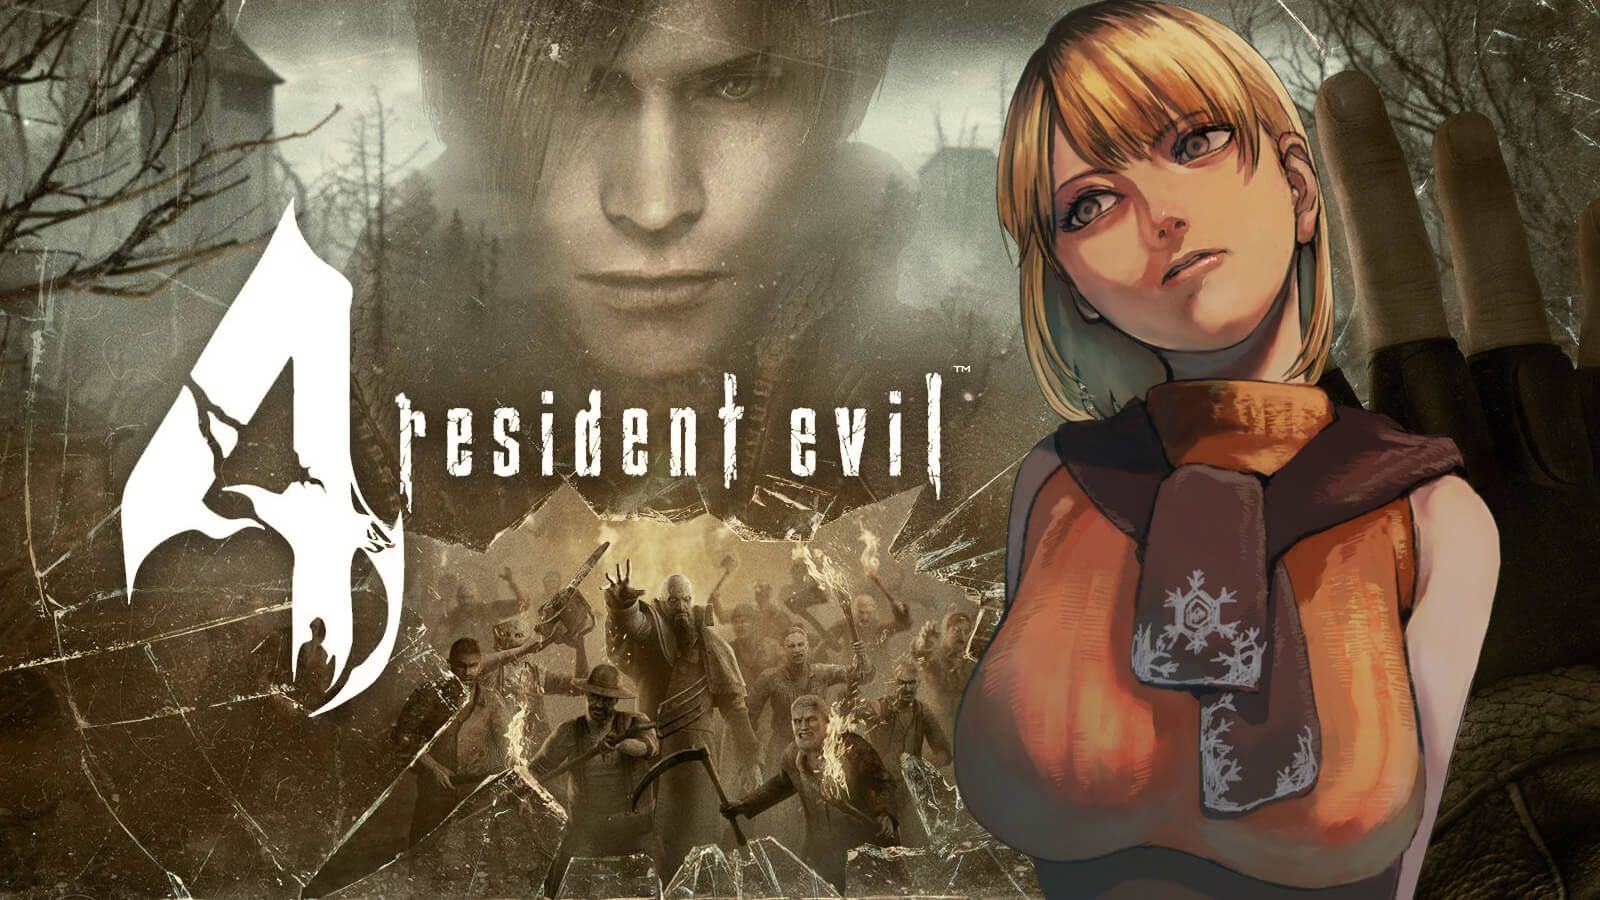 Resident+Evil+4+HD+Project+–+wallpaper+Ashley